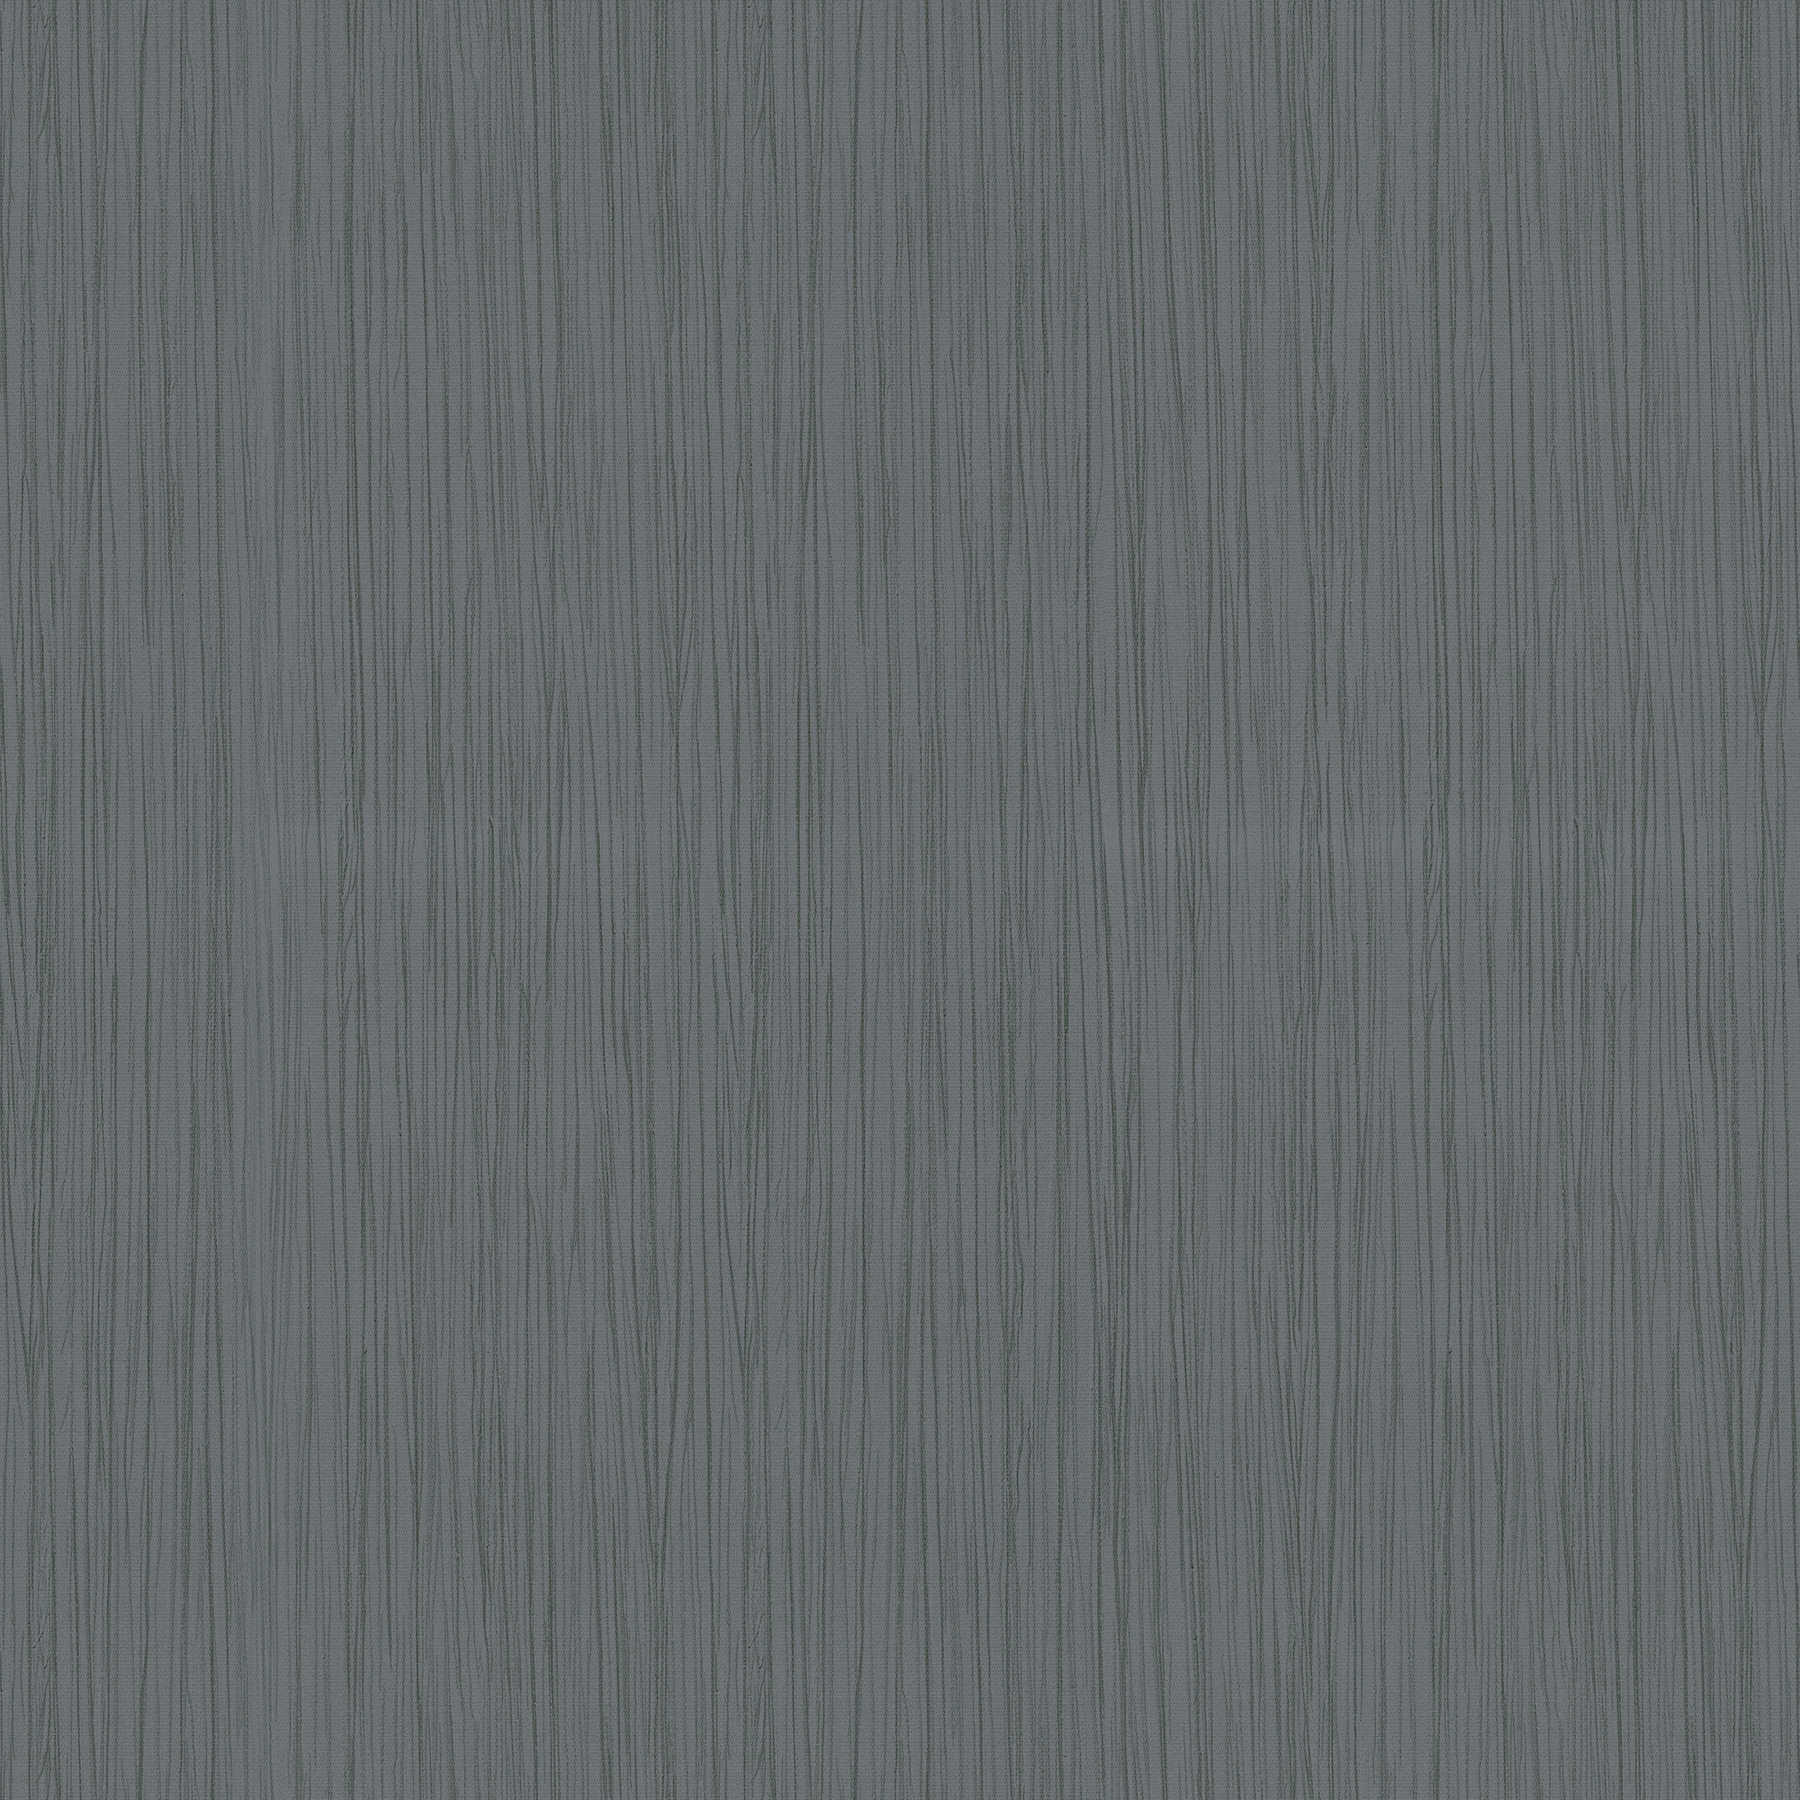 Dark non-woven wallpaper anthracite grey with textured pattern
